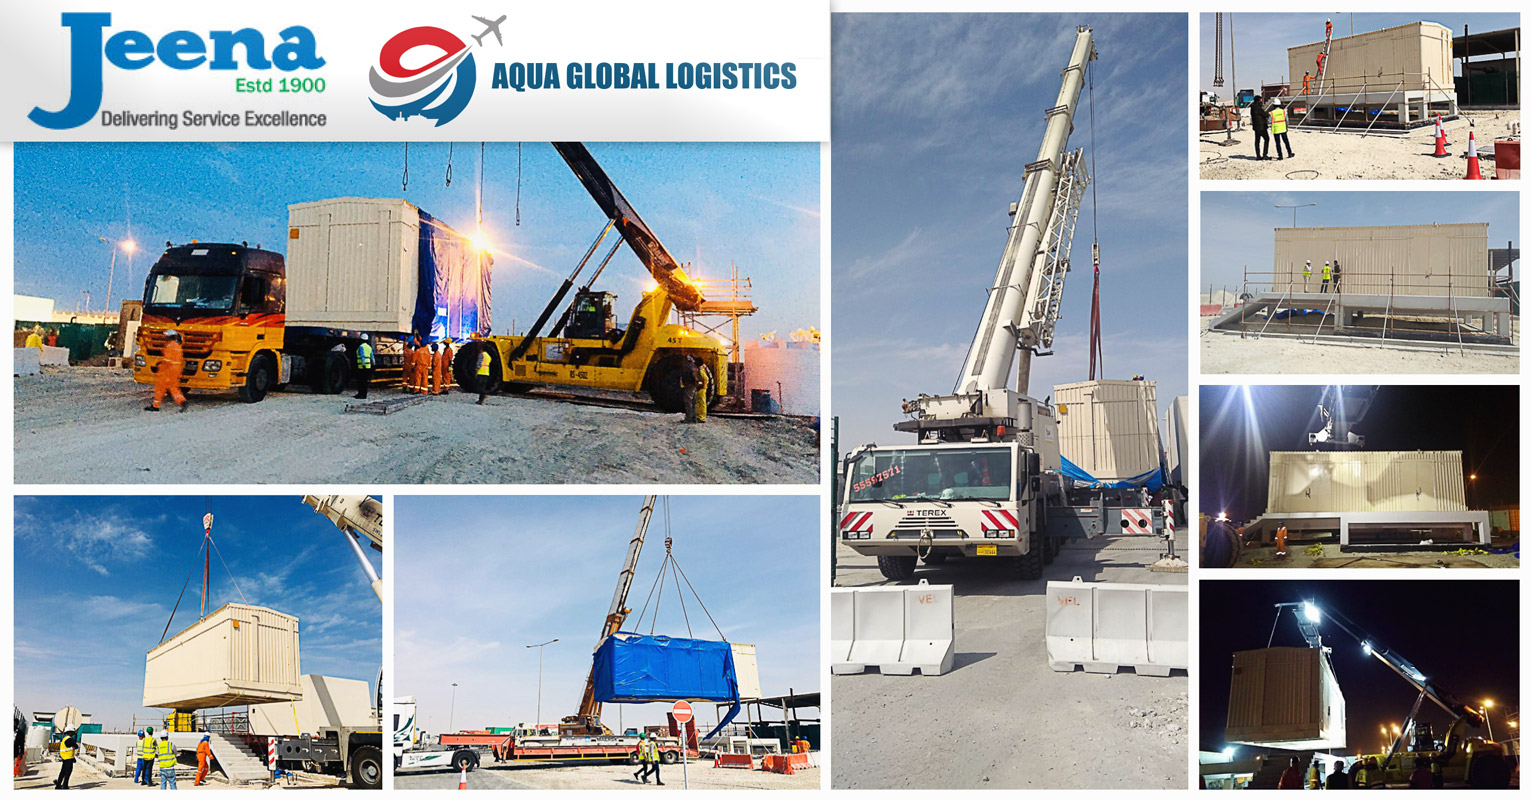 Joint project between Jeena and Auqua Global Logistics